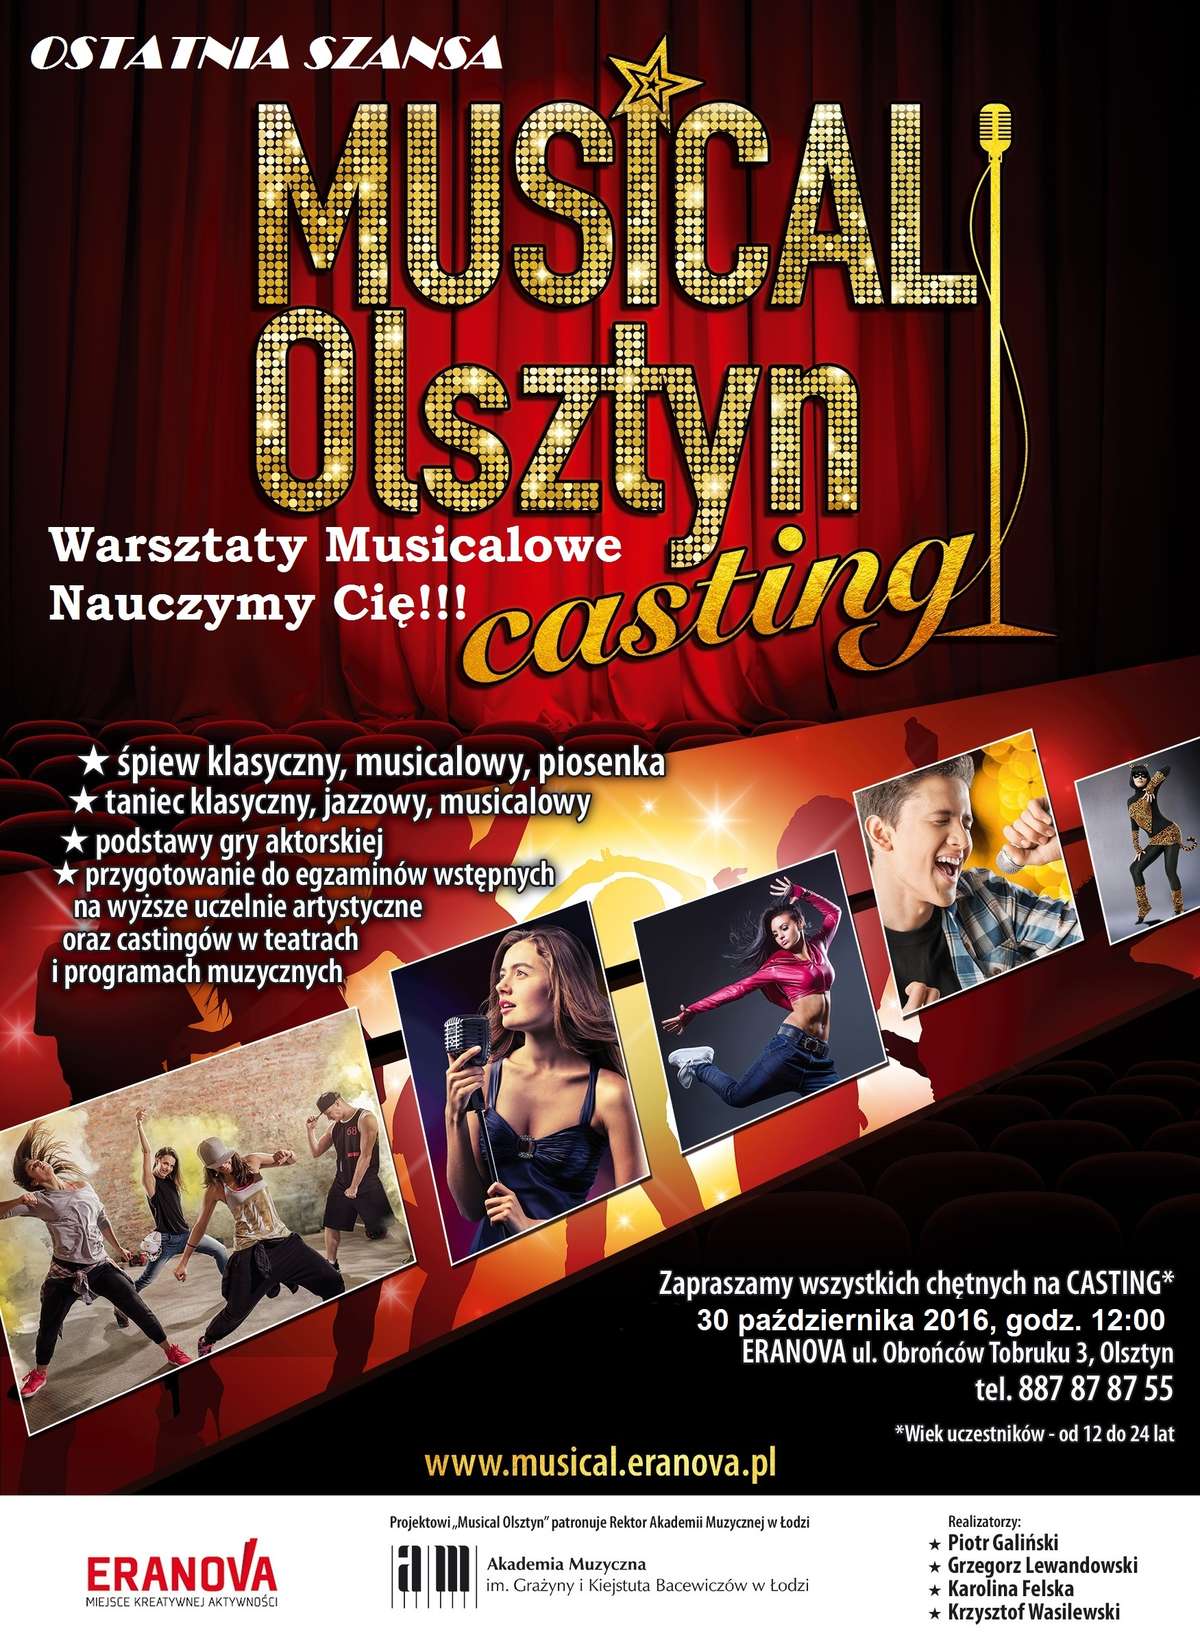 Musical Casting w Olsztynie - full image